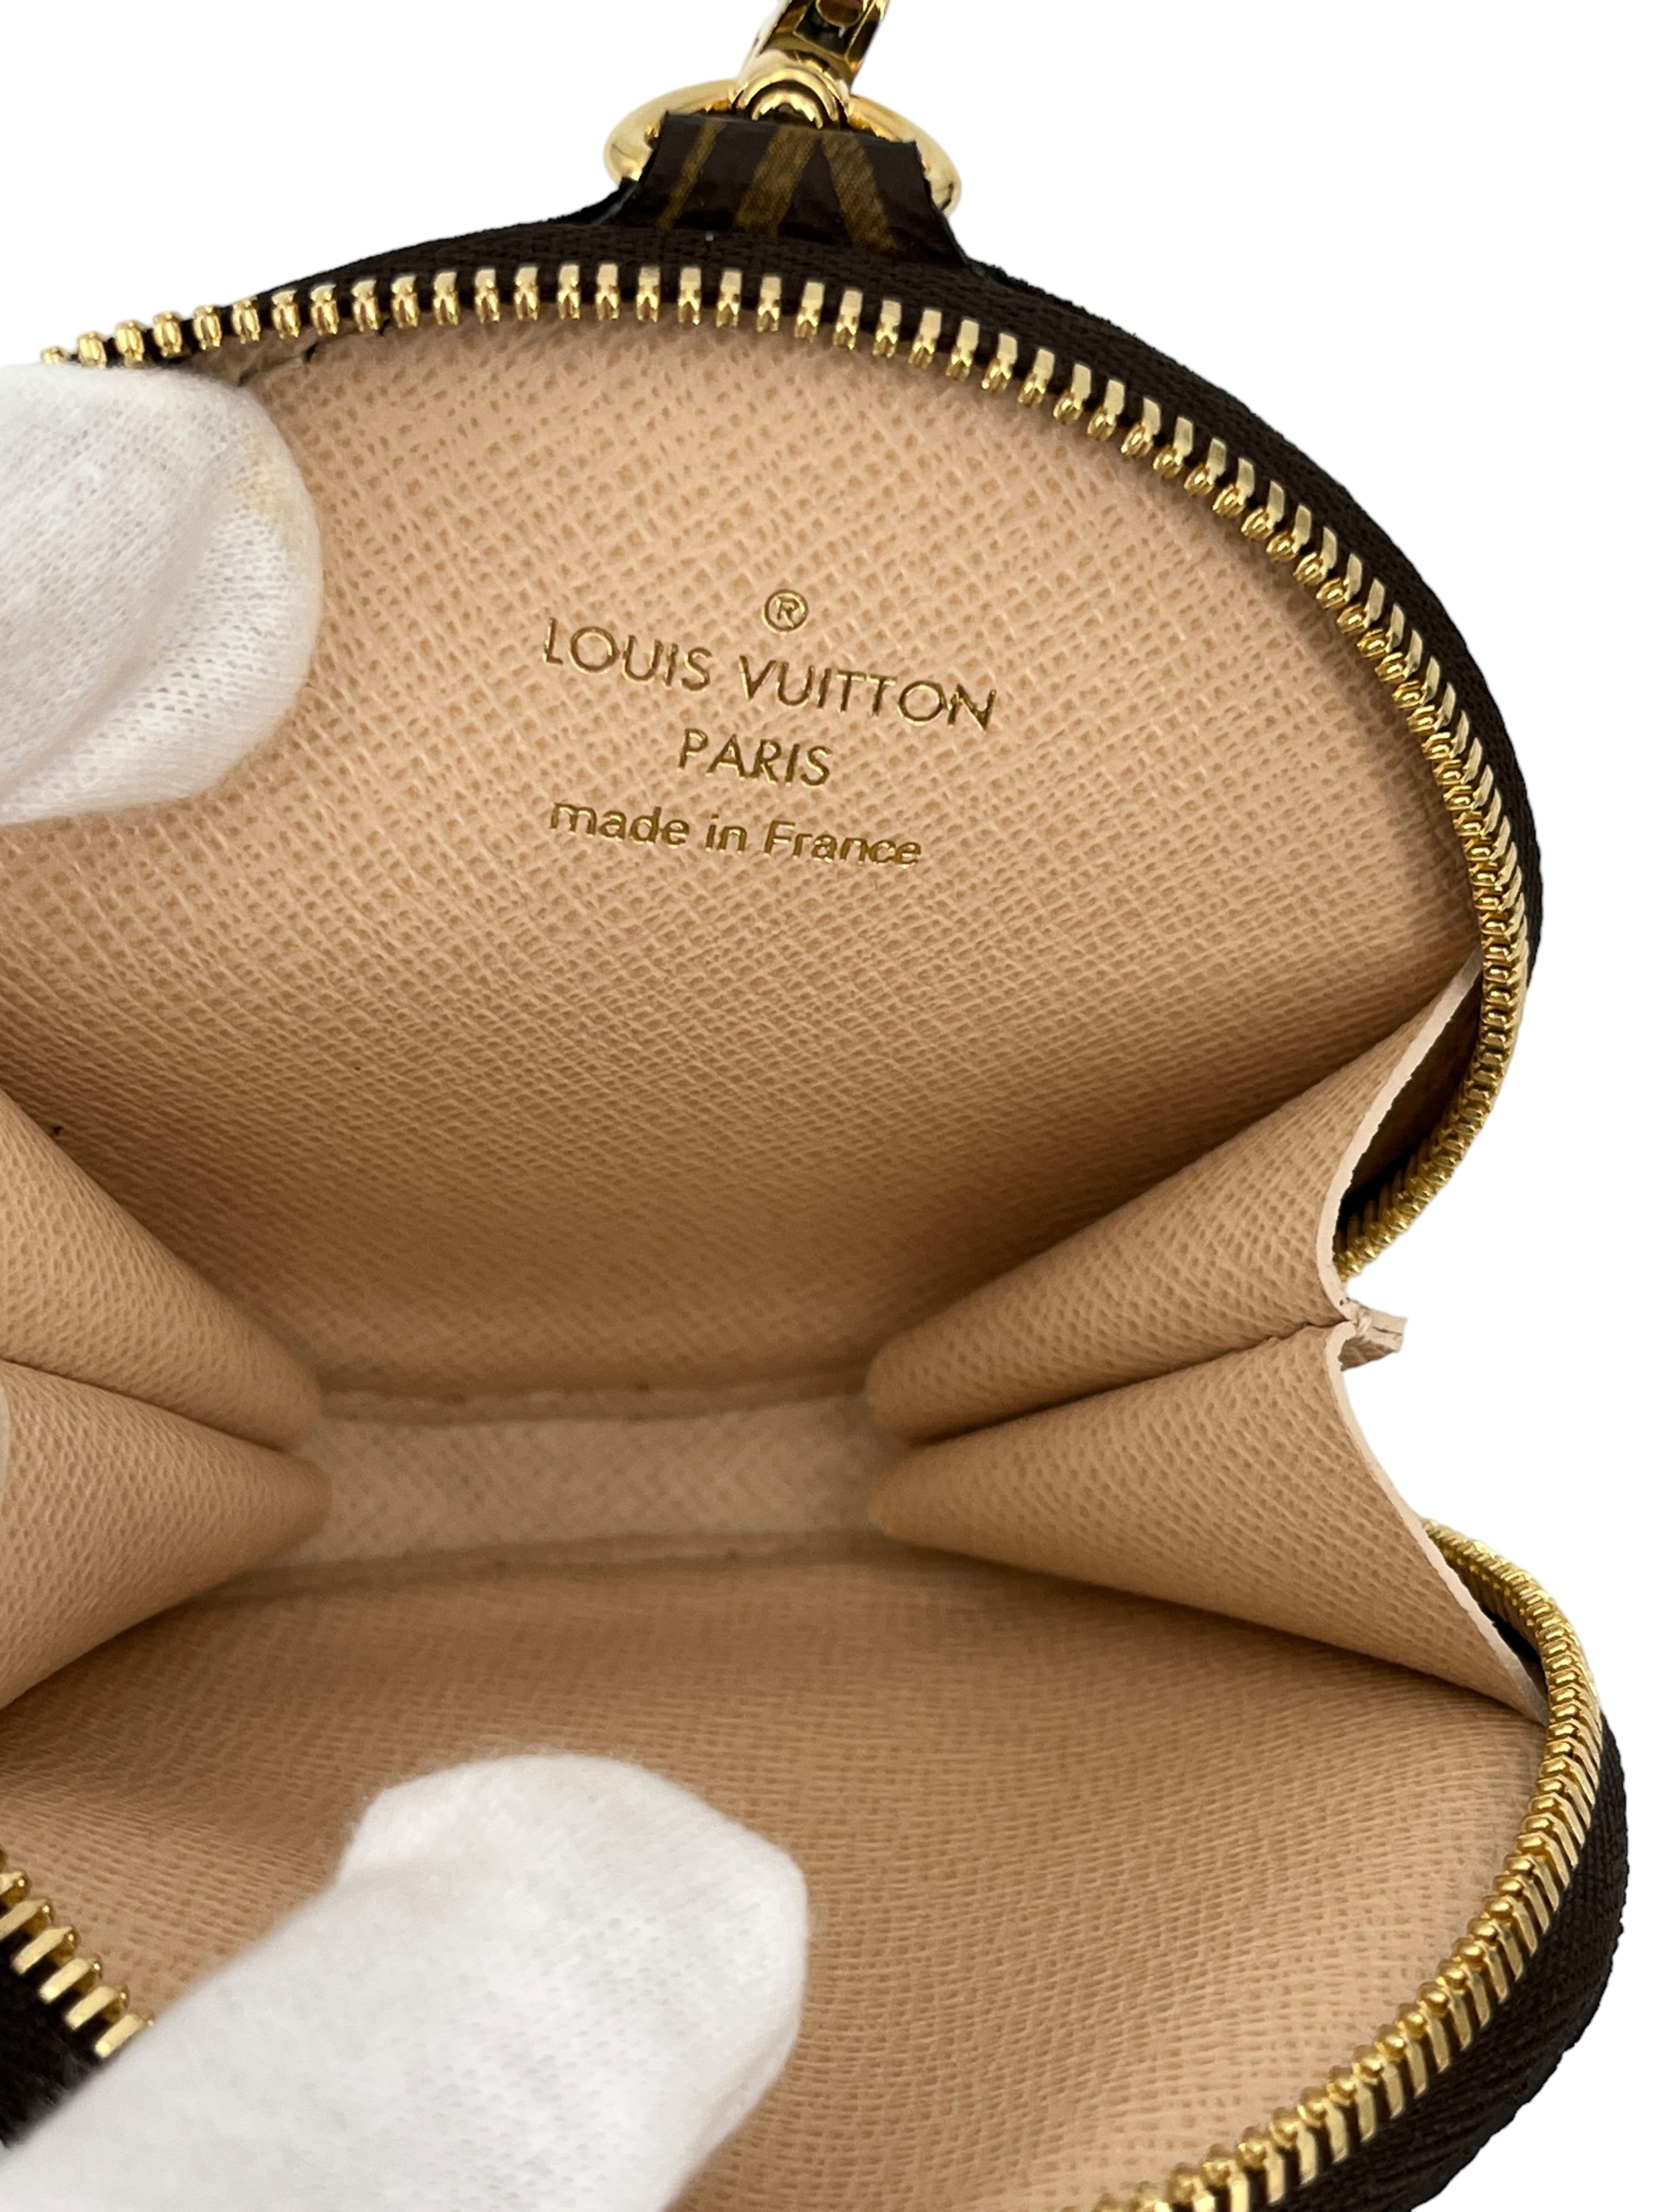 True-to-ORIGINAL] Louis Vuitton Multi Pochette Accessoires